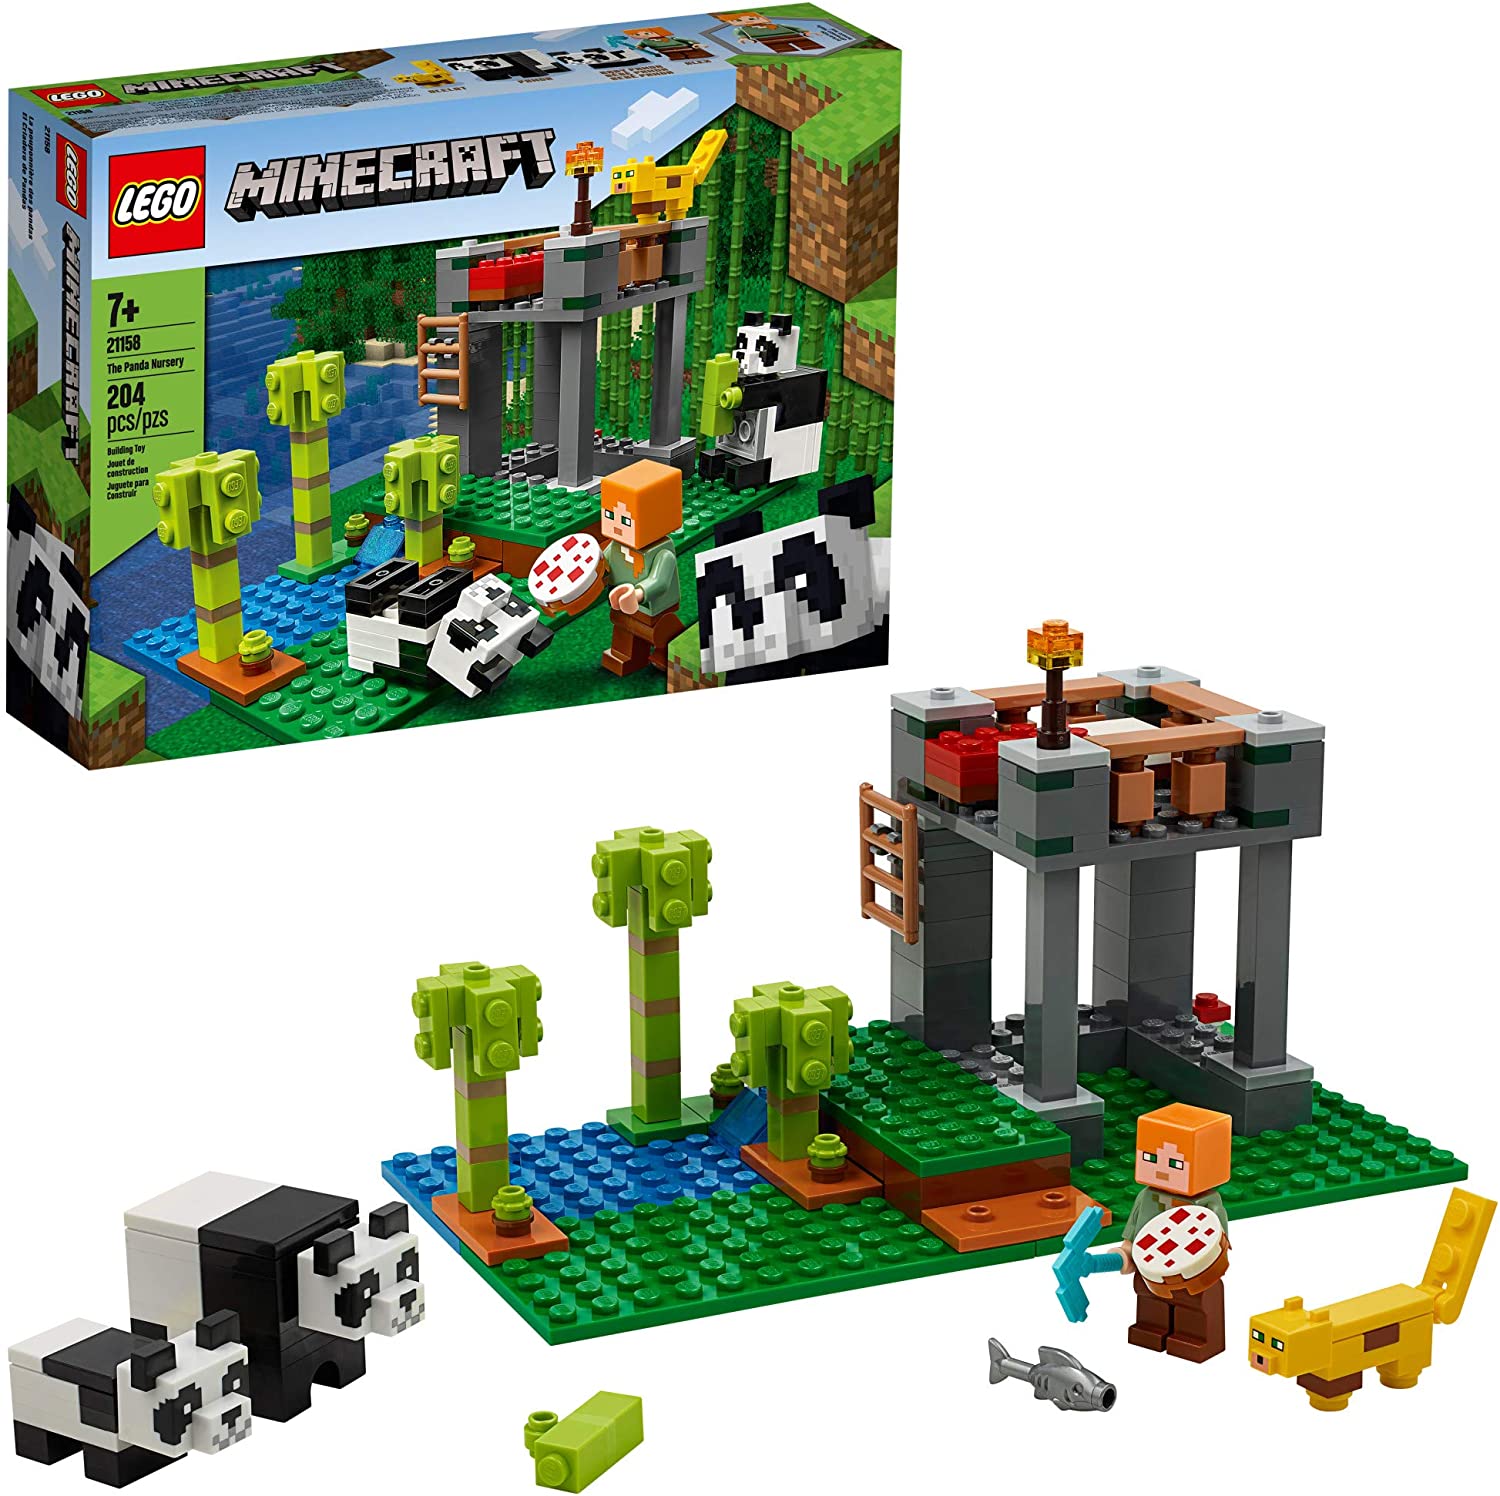 204-Piece LEGO Minecraft: The Panda Nursery Building Set $7.99 via Amazon